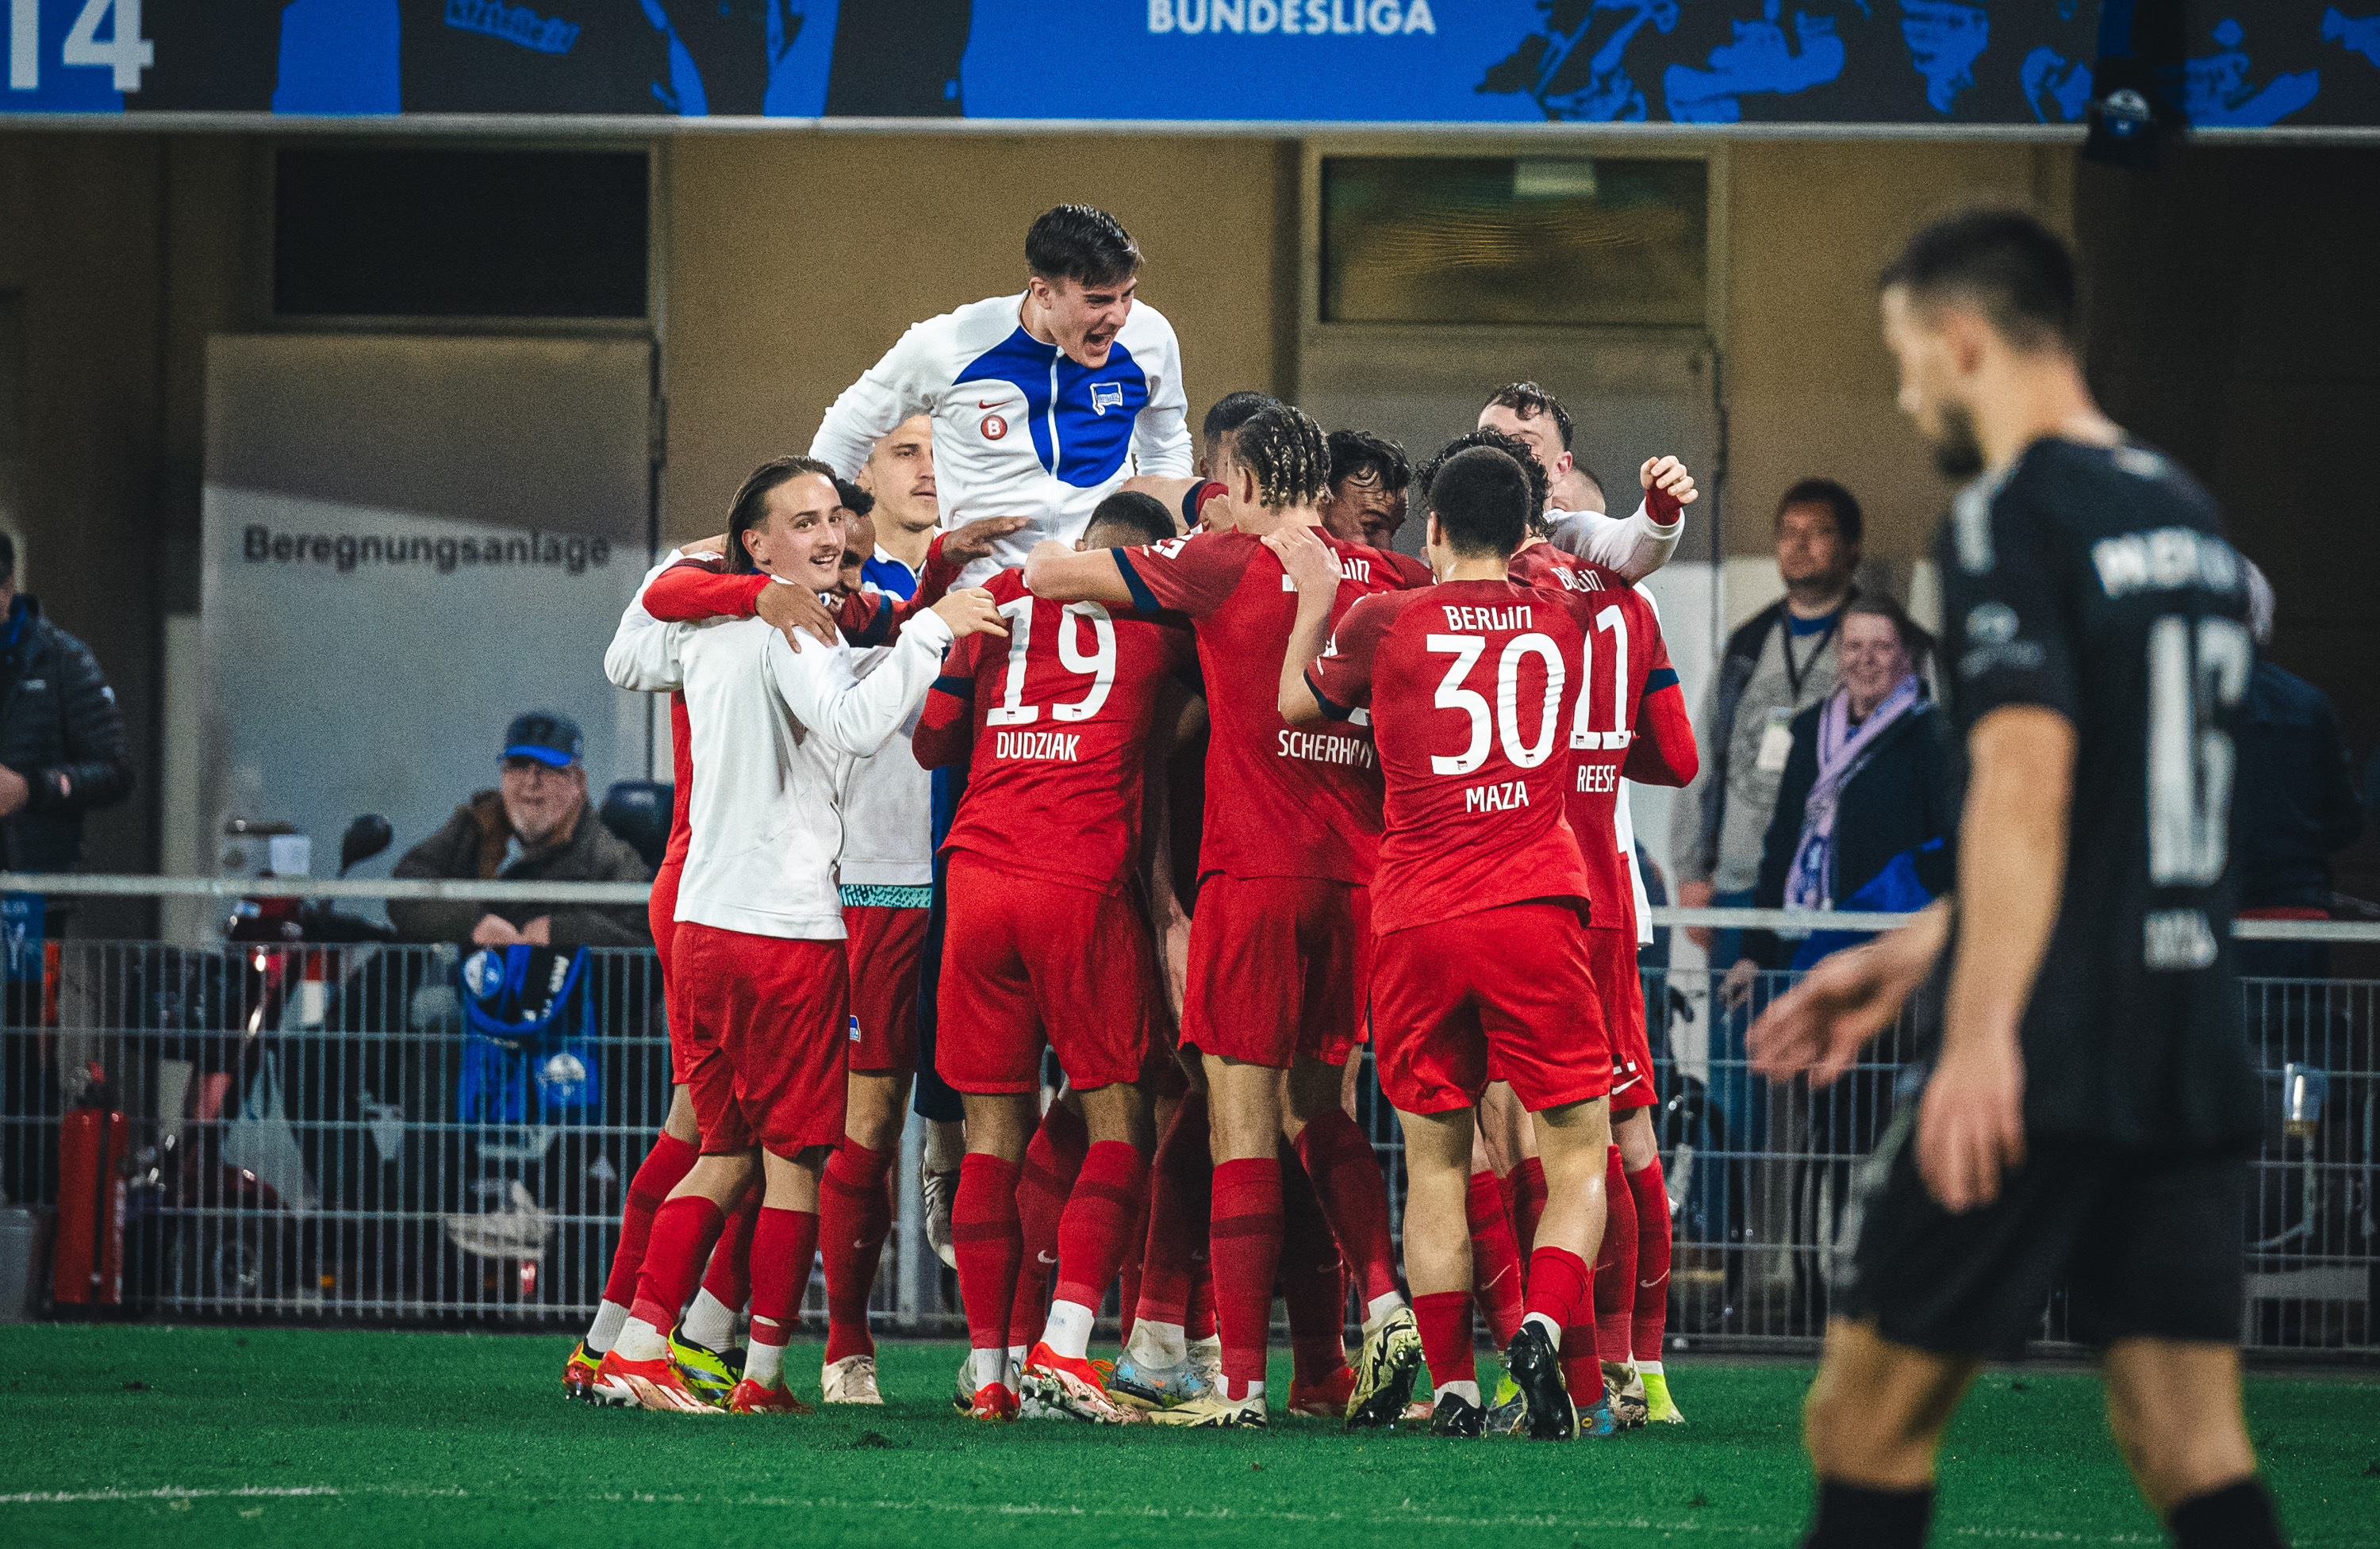 Hertha celebrate their winning goal against Paderborn.